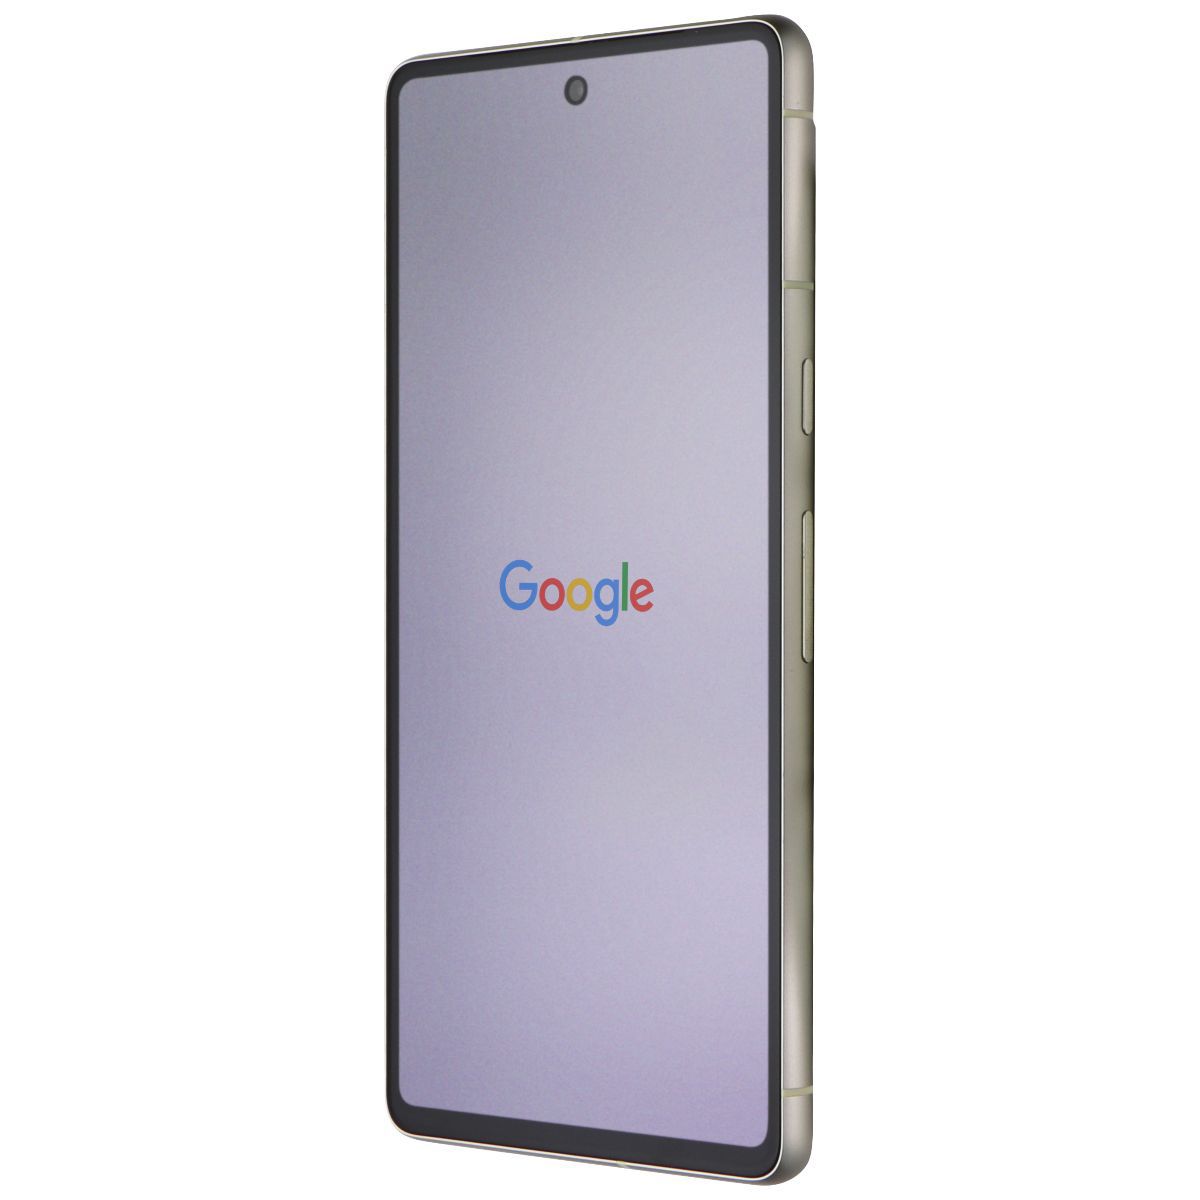 Google Pixel 7 (6.3-inch) Smartphone (GVU6C) Verizon Only - 128GB / Lemongrass Cell Phones & Smartphones Google    - Simple Cell Bulk Wholesale Pricing - USA Seller